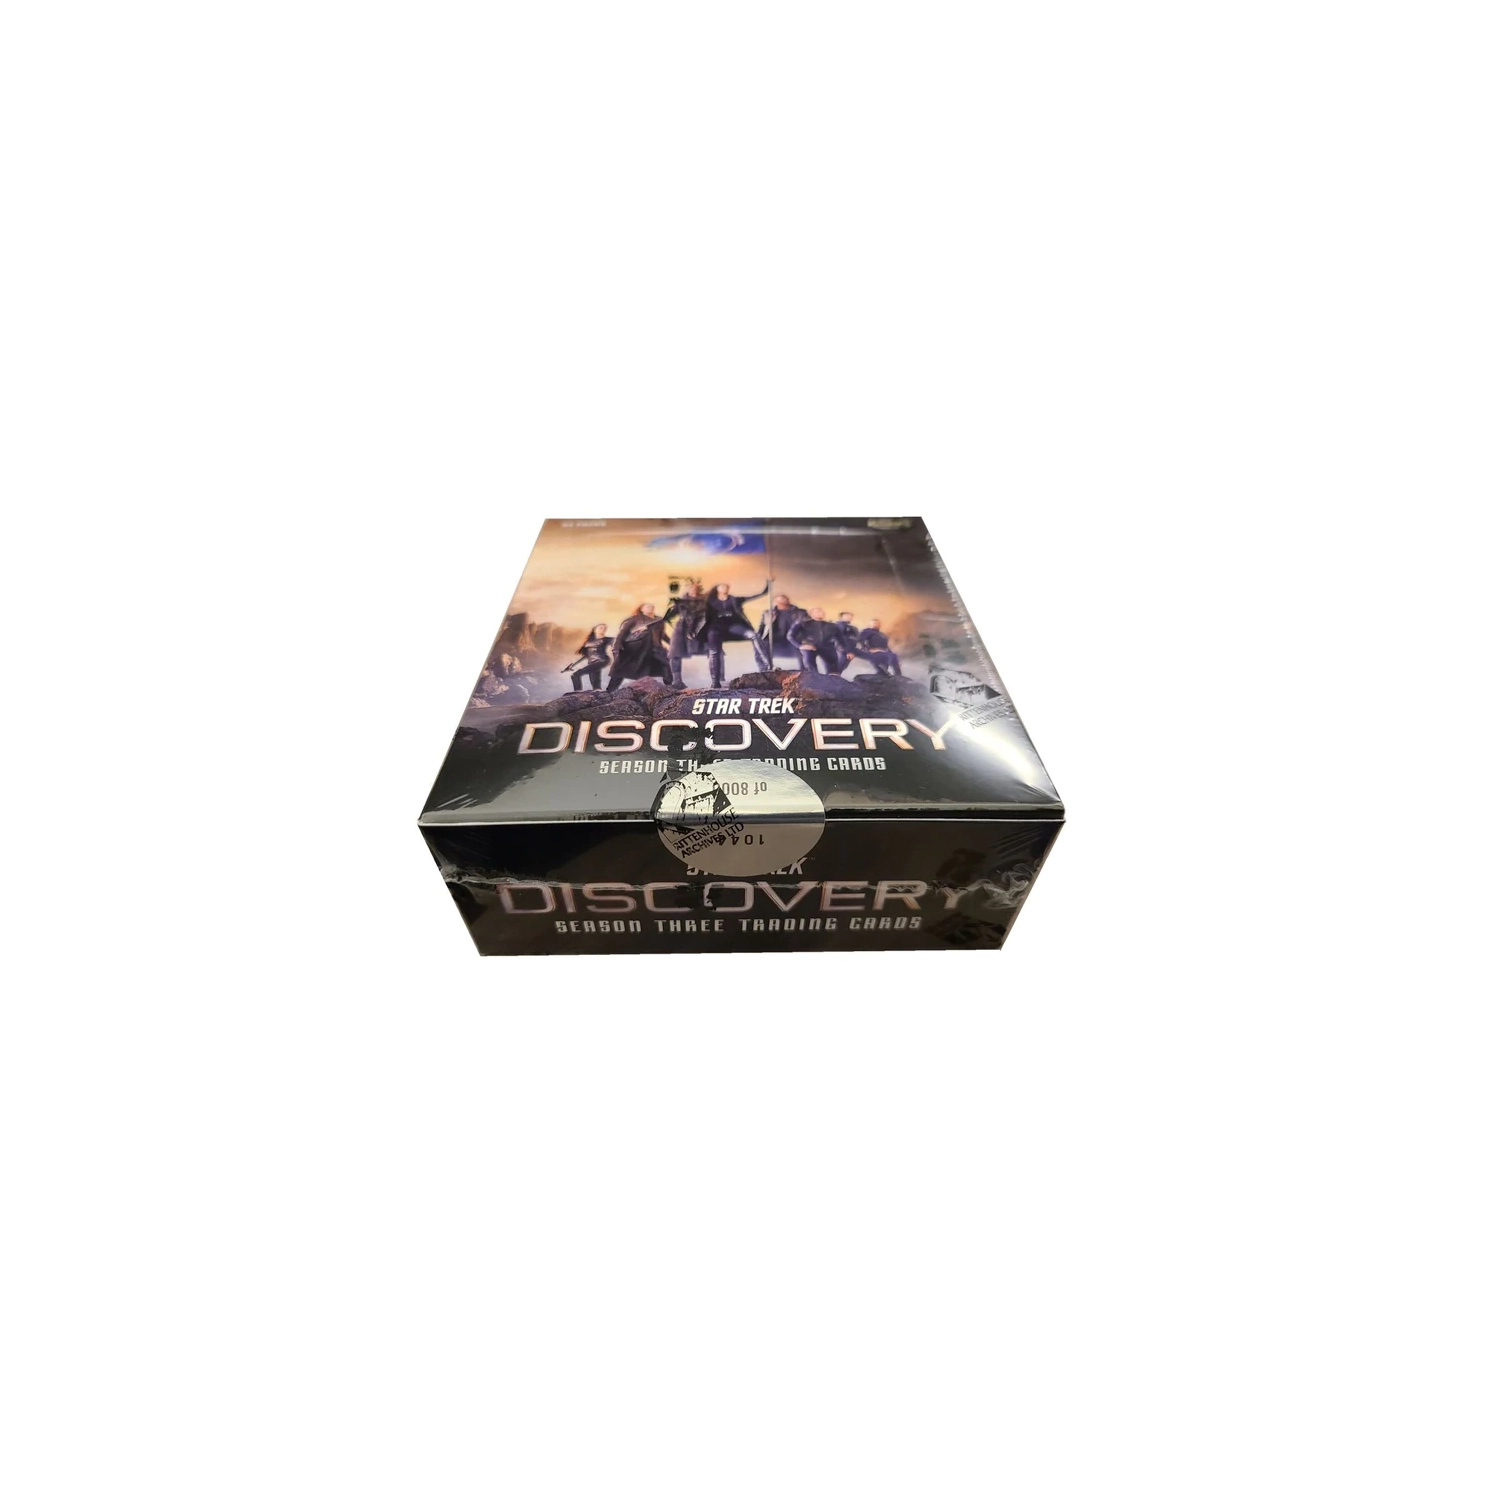 2022 Star Trek Discovery Season Three Trading Cards Box 24 packs per box, 5 cards per pack